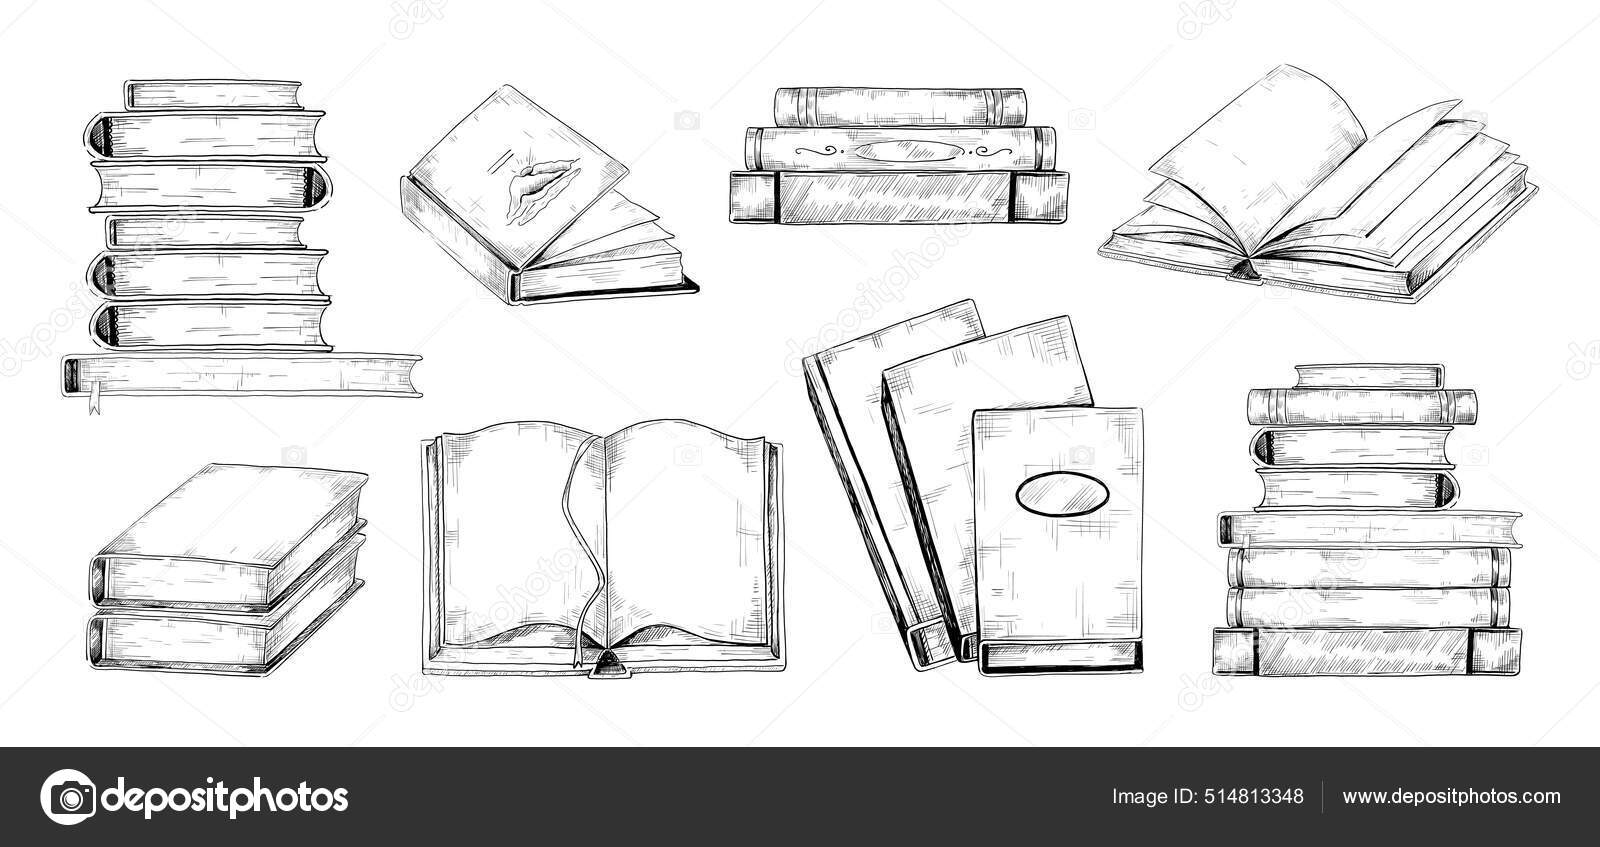 https://st.depositphotos.com/21121724/51481/v/1600/depositphotos_514813348-stock-illustration-books-sketch-vintage-engraving-of.jpg